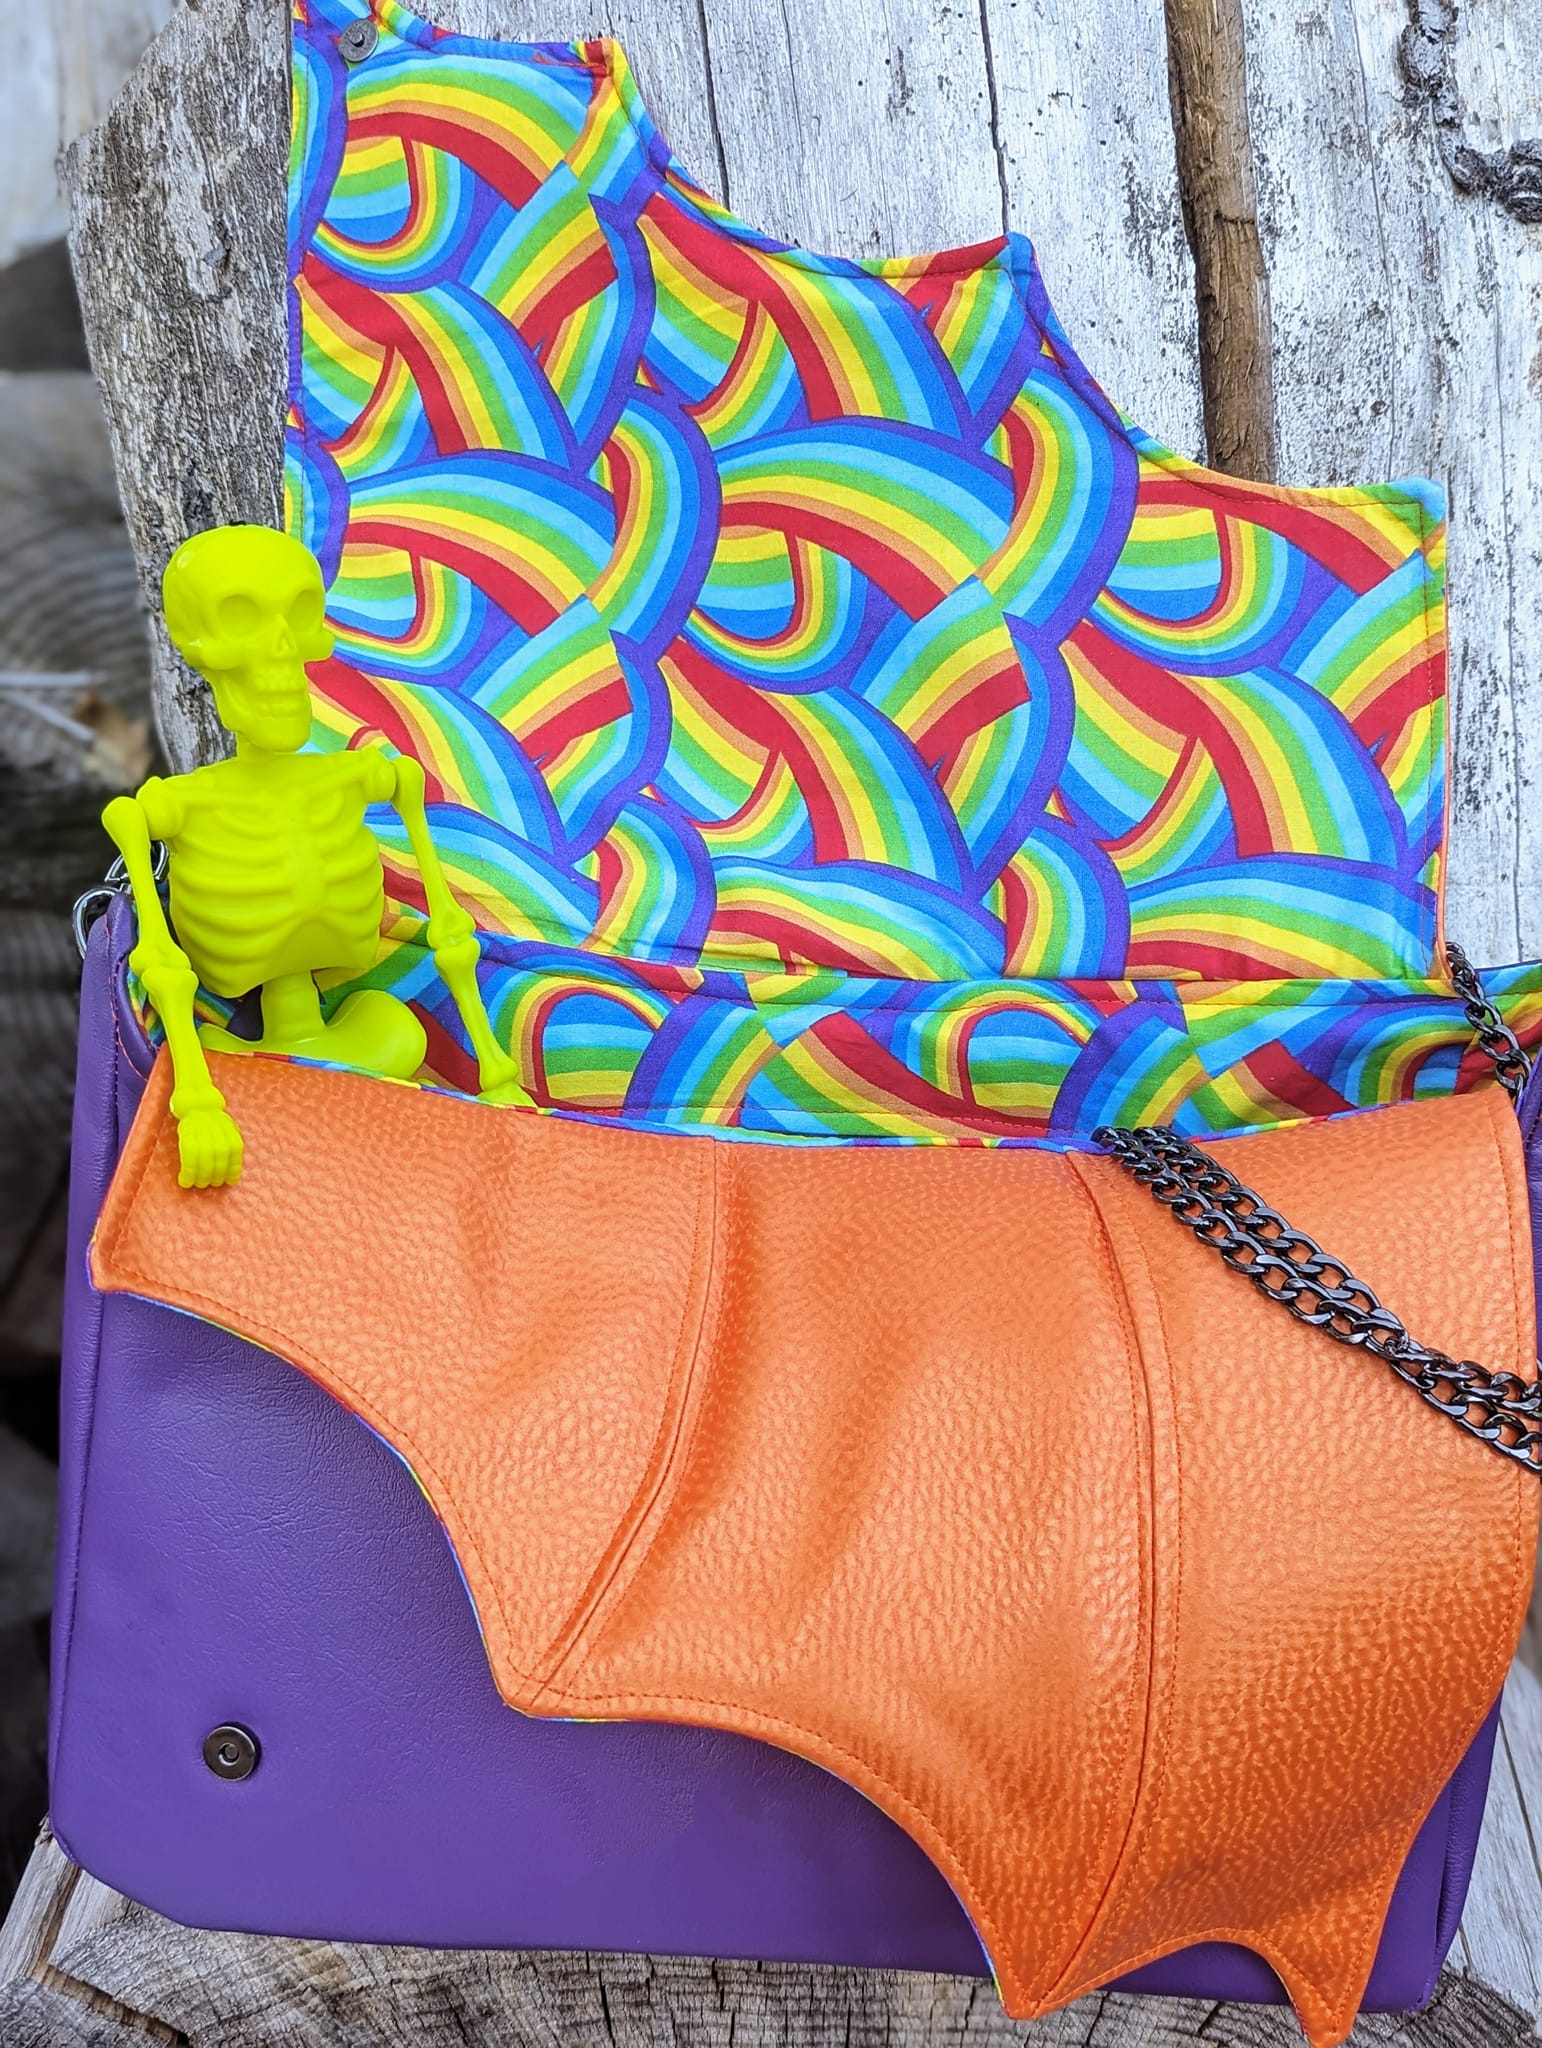 Orange Bags For Women Online – Buy Orange Bags Online in India